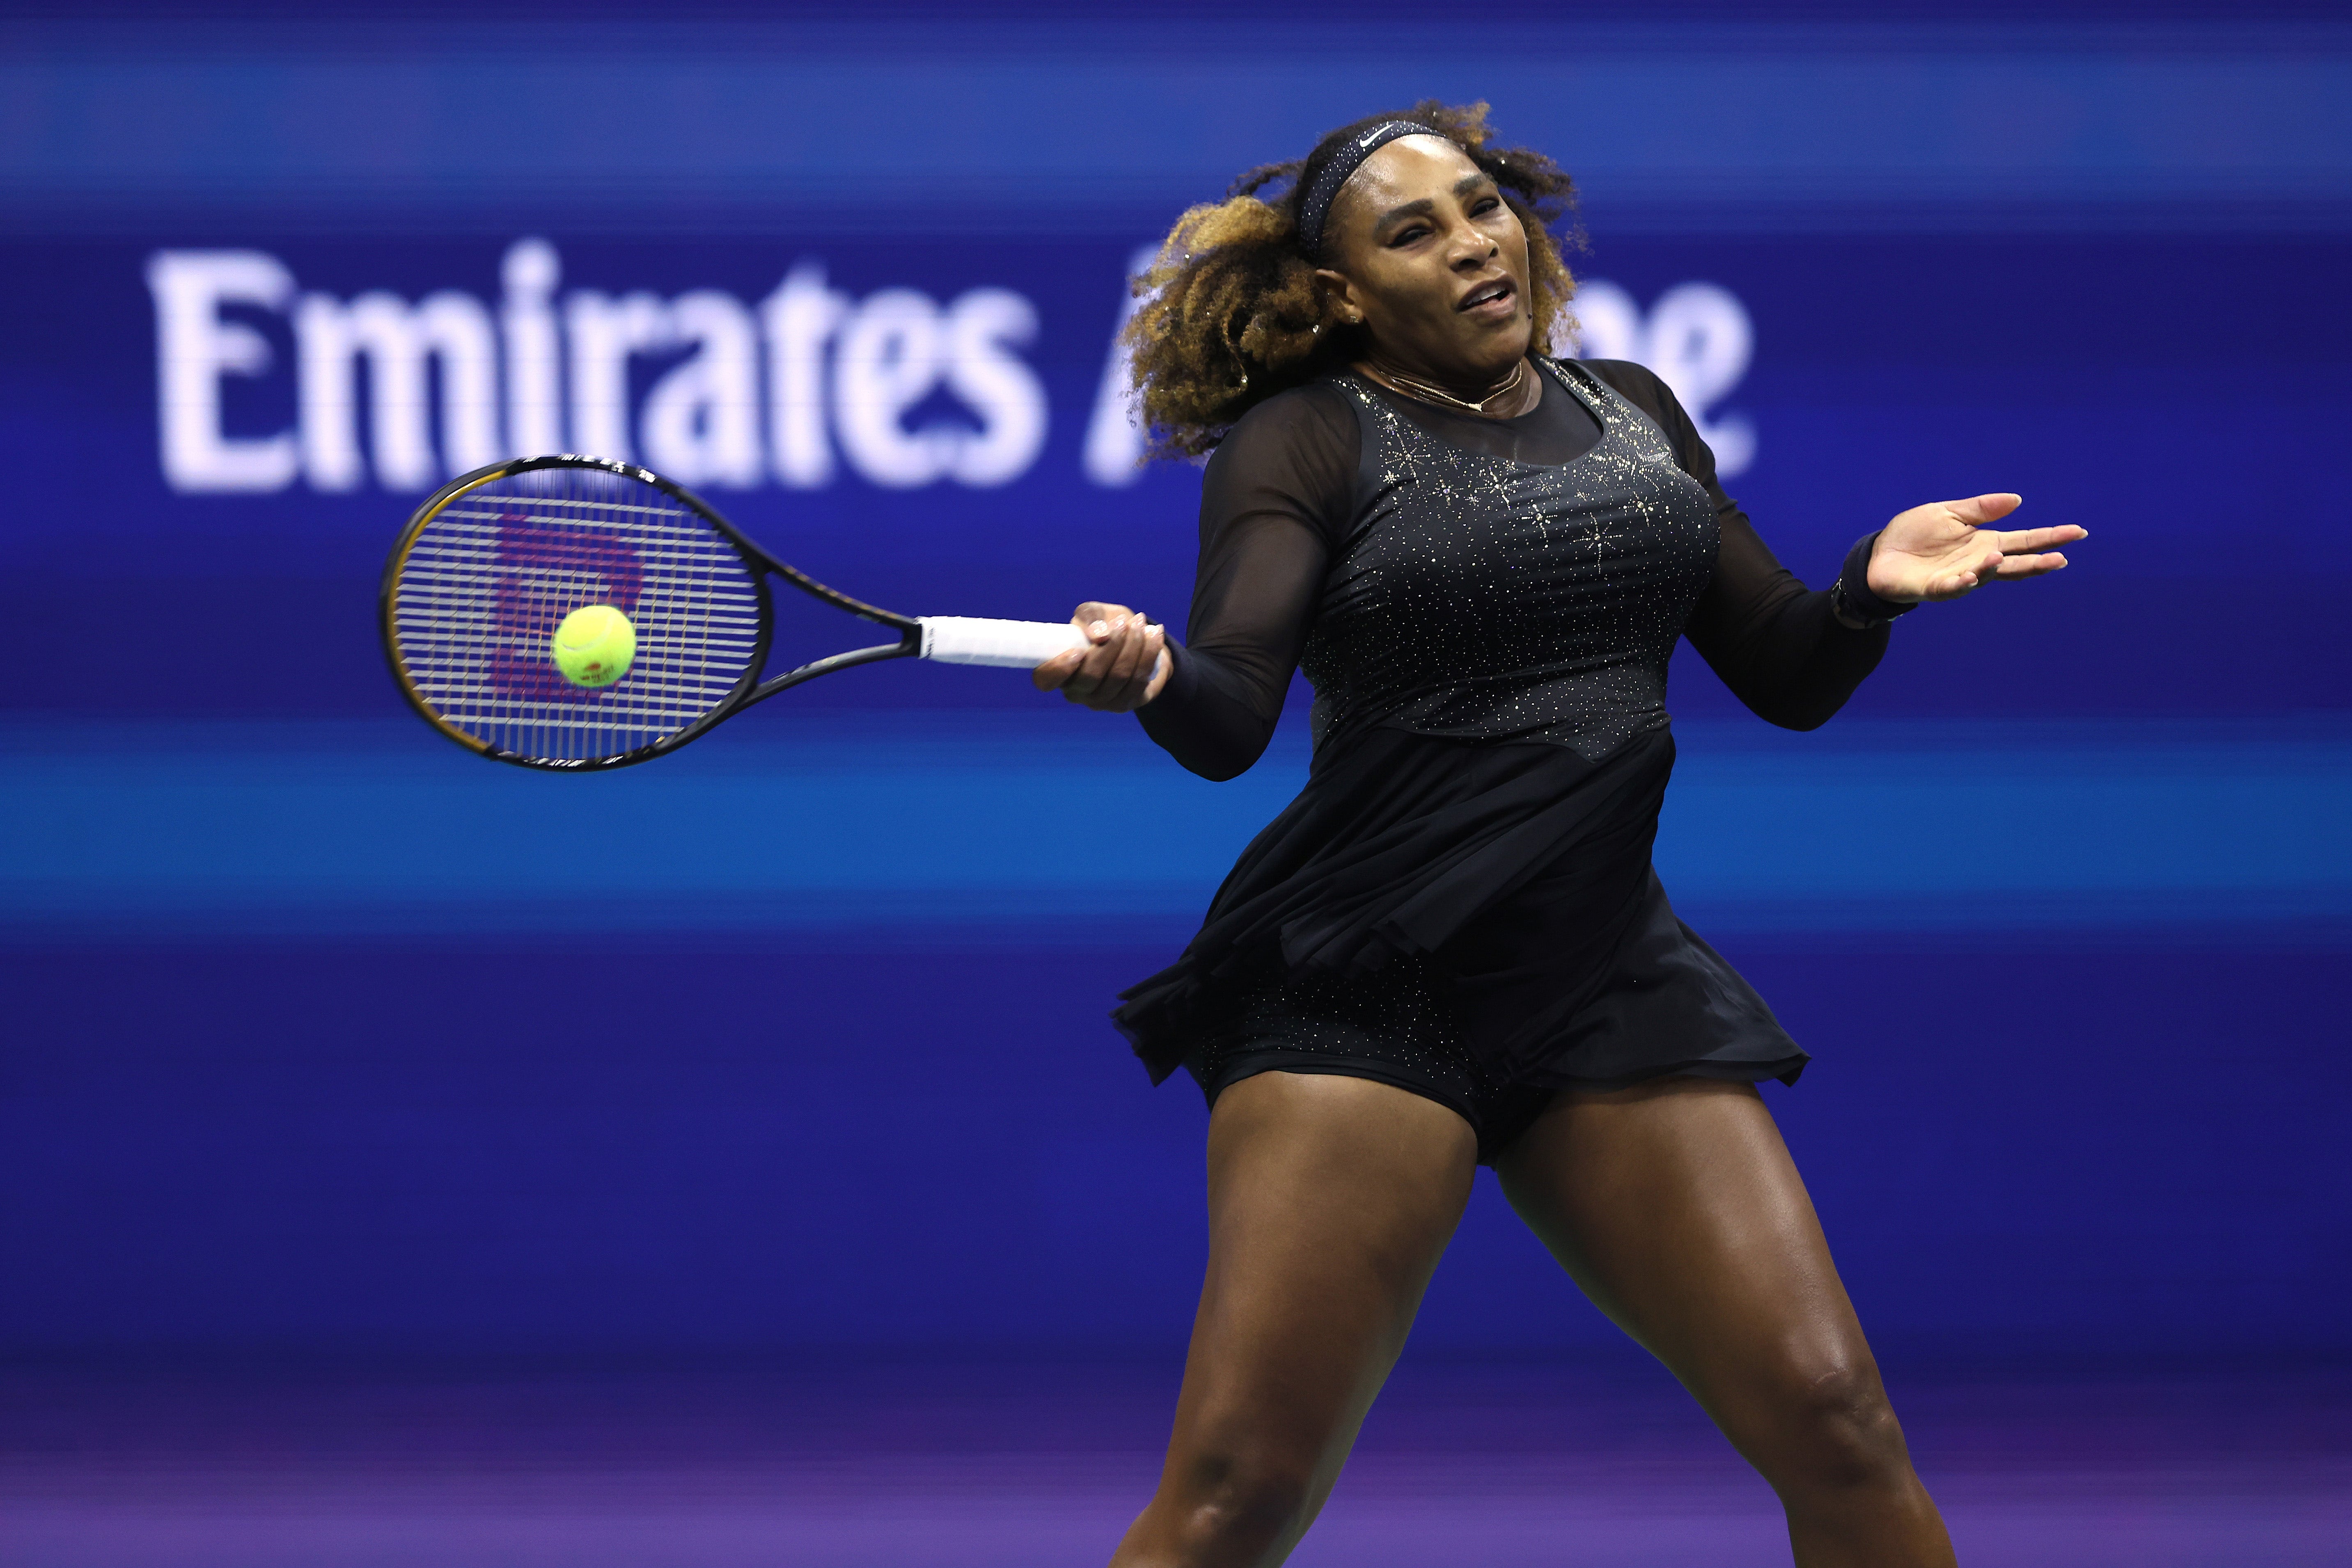 Serena Williams upsets No. 2 Anett Kontaveit, advances to next round of US Open